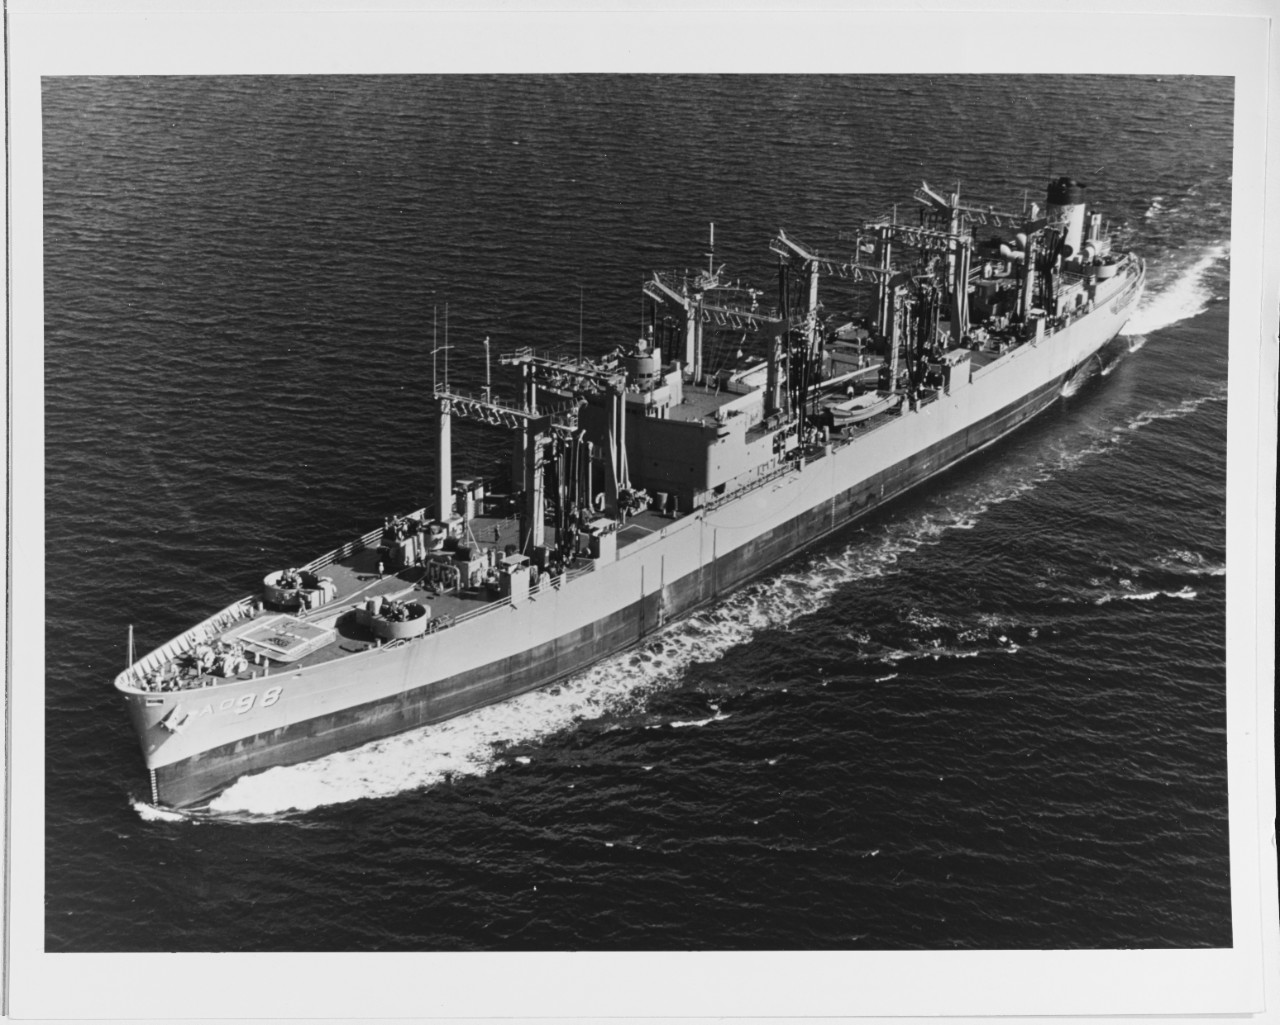 The USS CALOOSAHATCHEE (AO-98)